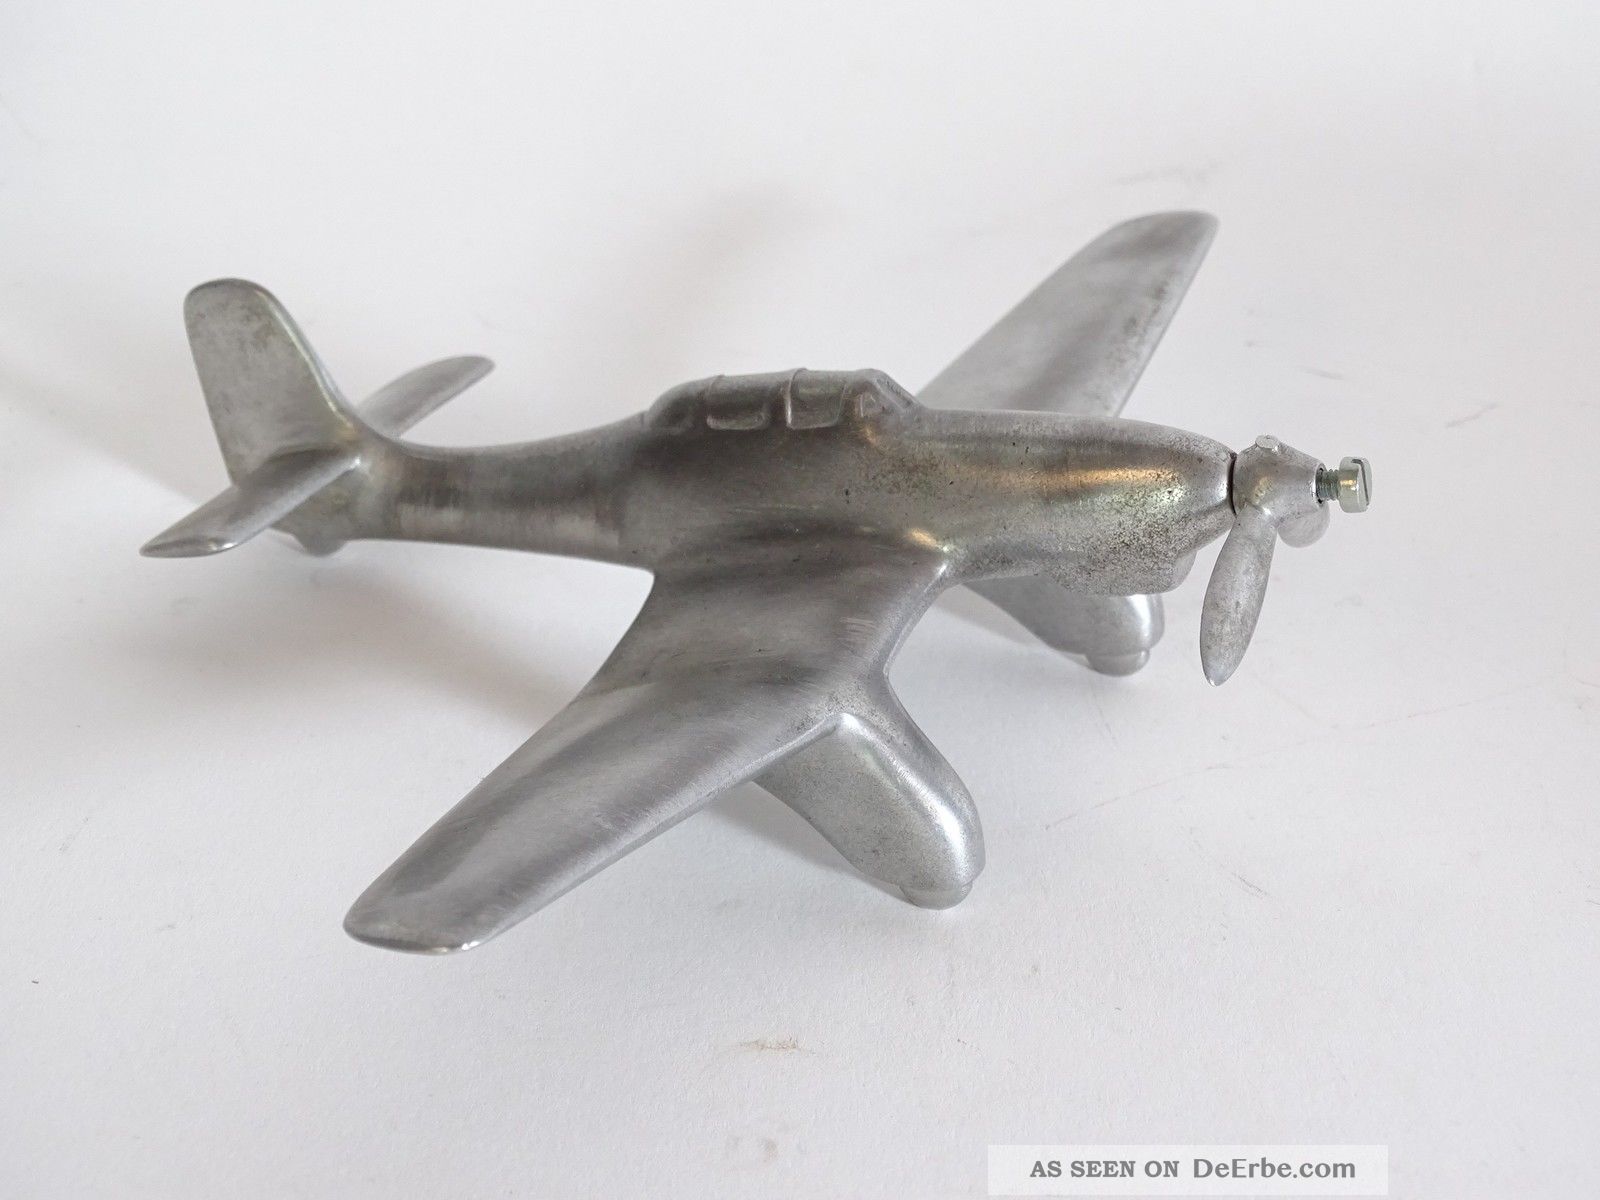 Antikes Flugzeug Modell Aus Metall Kampfflugzeug Kriegsflugzeug Eisen Bild